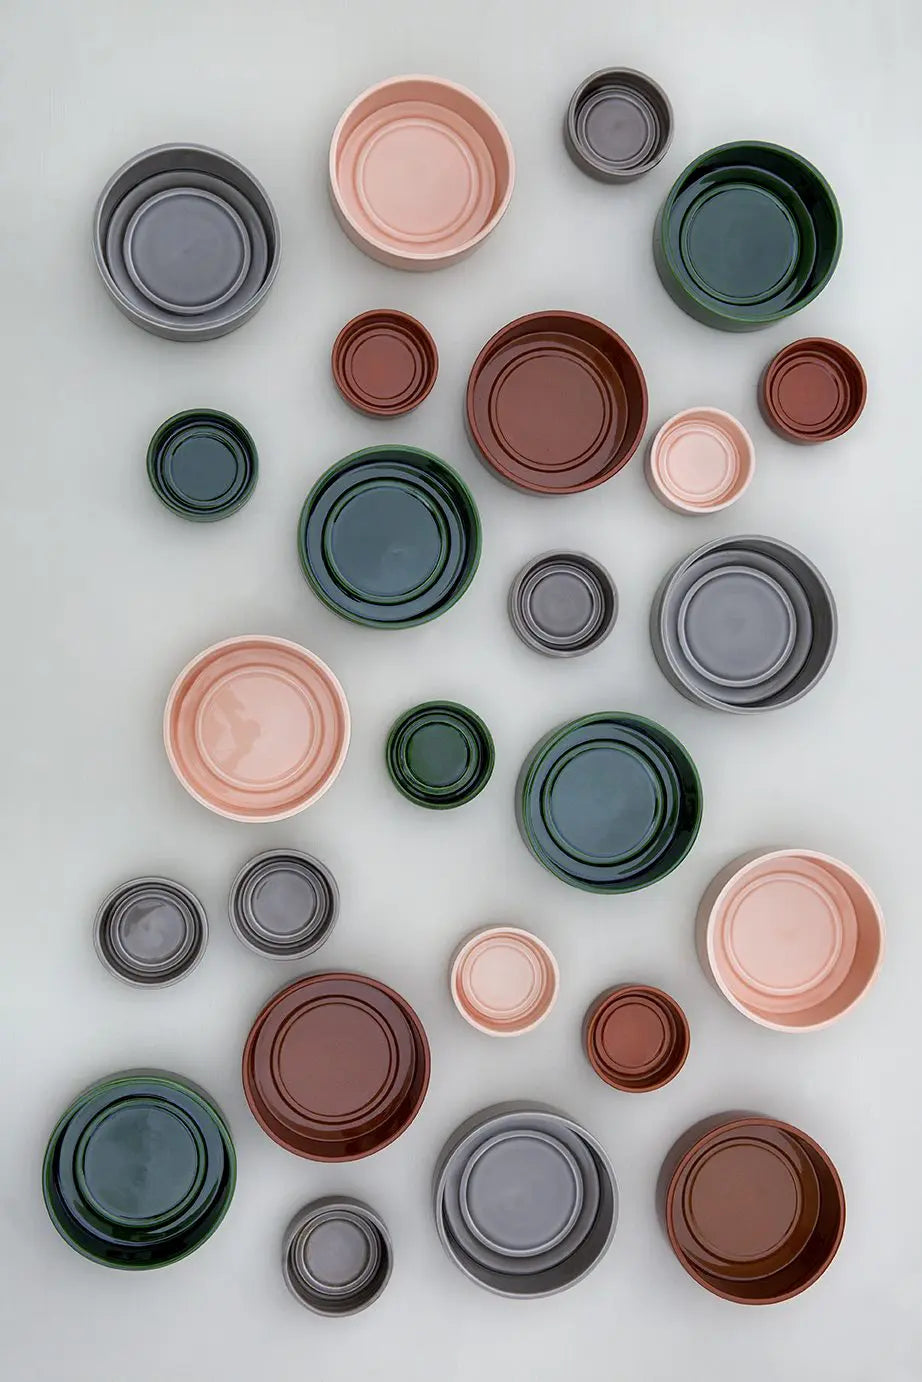 Many colour glazed hoof pots and saucers